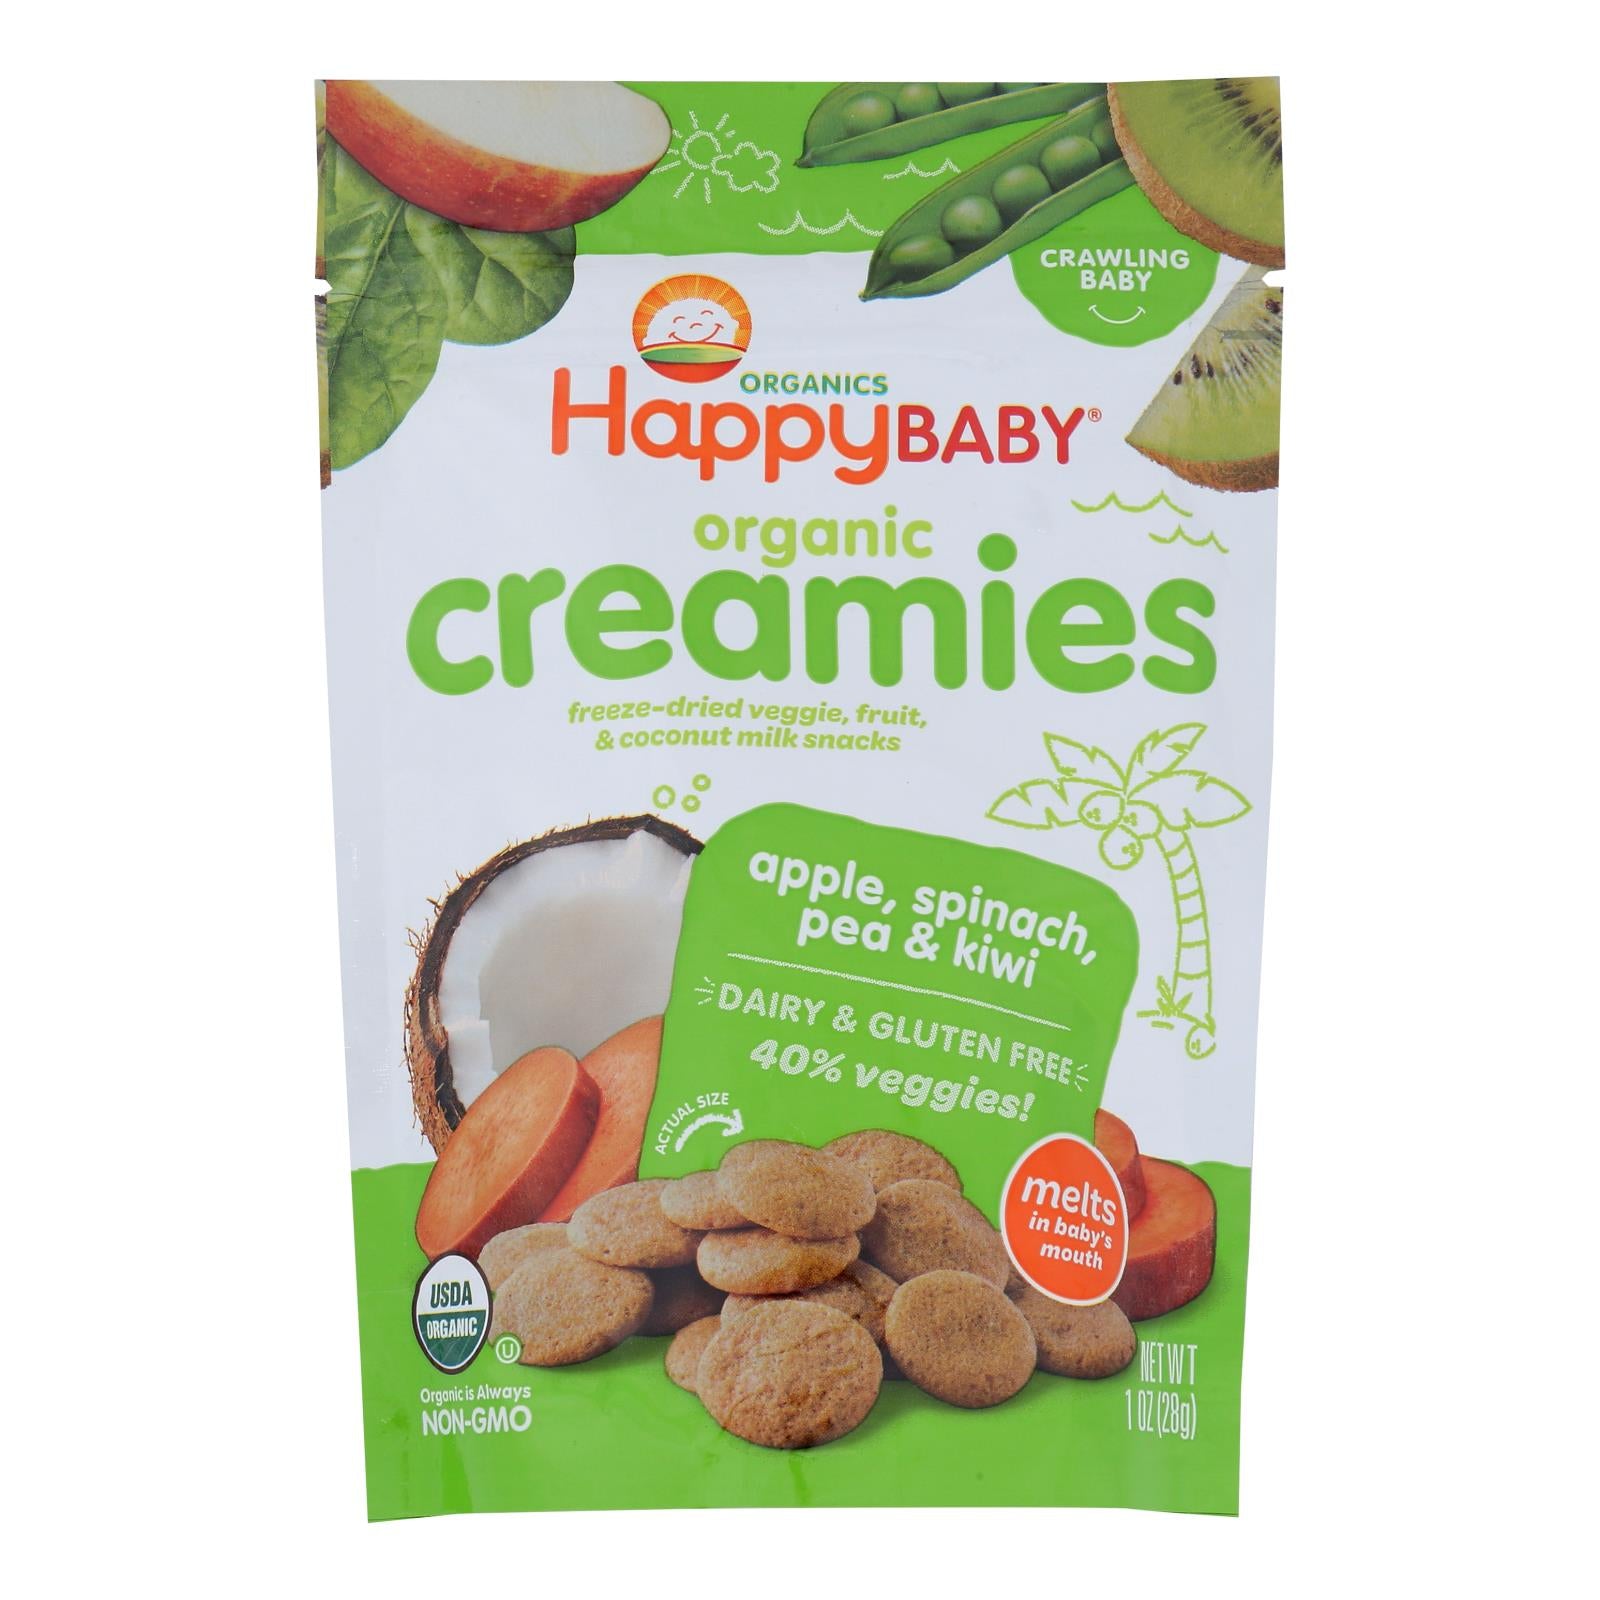 Happy Creamies Organic Snacks - Apple Spinach Pea Kiwi - Case of 8 - 1 oz